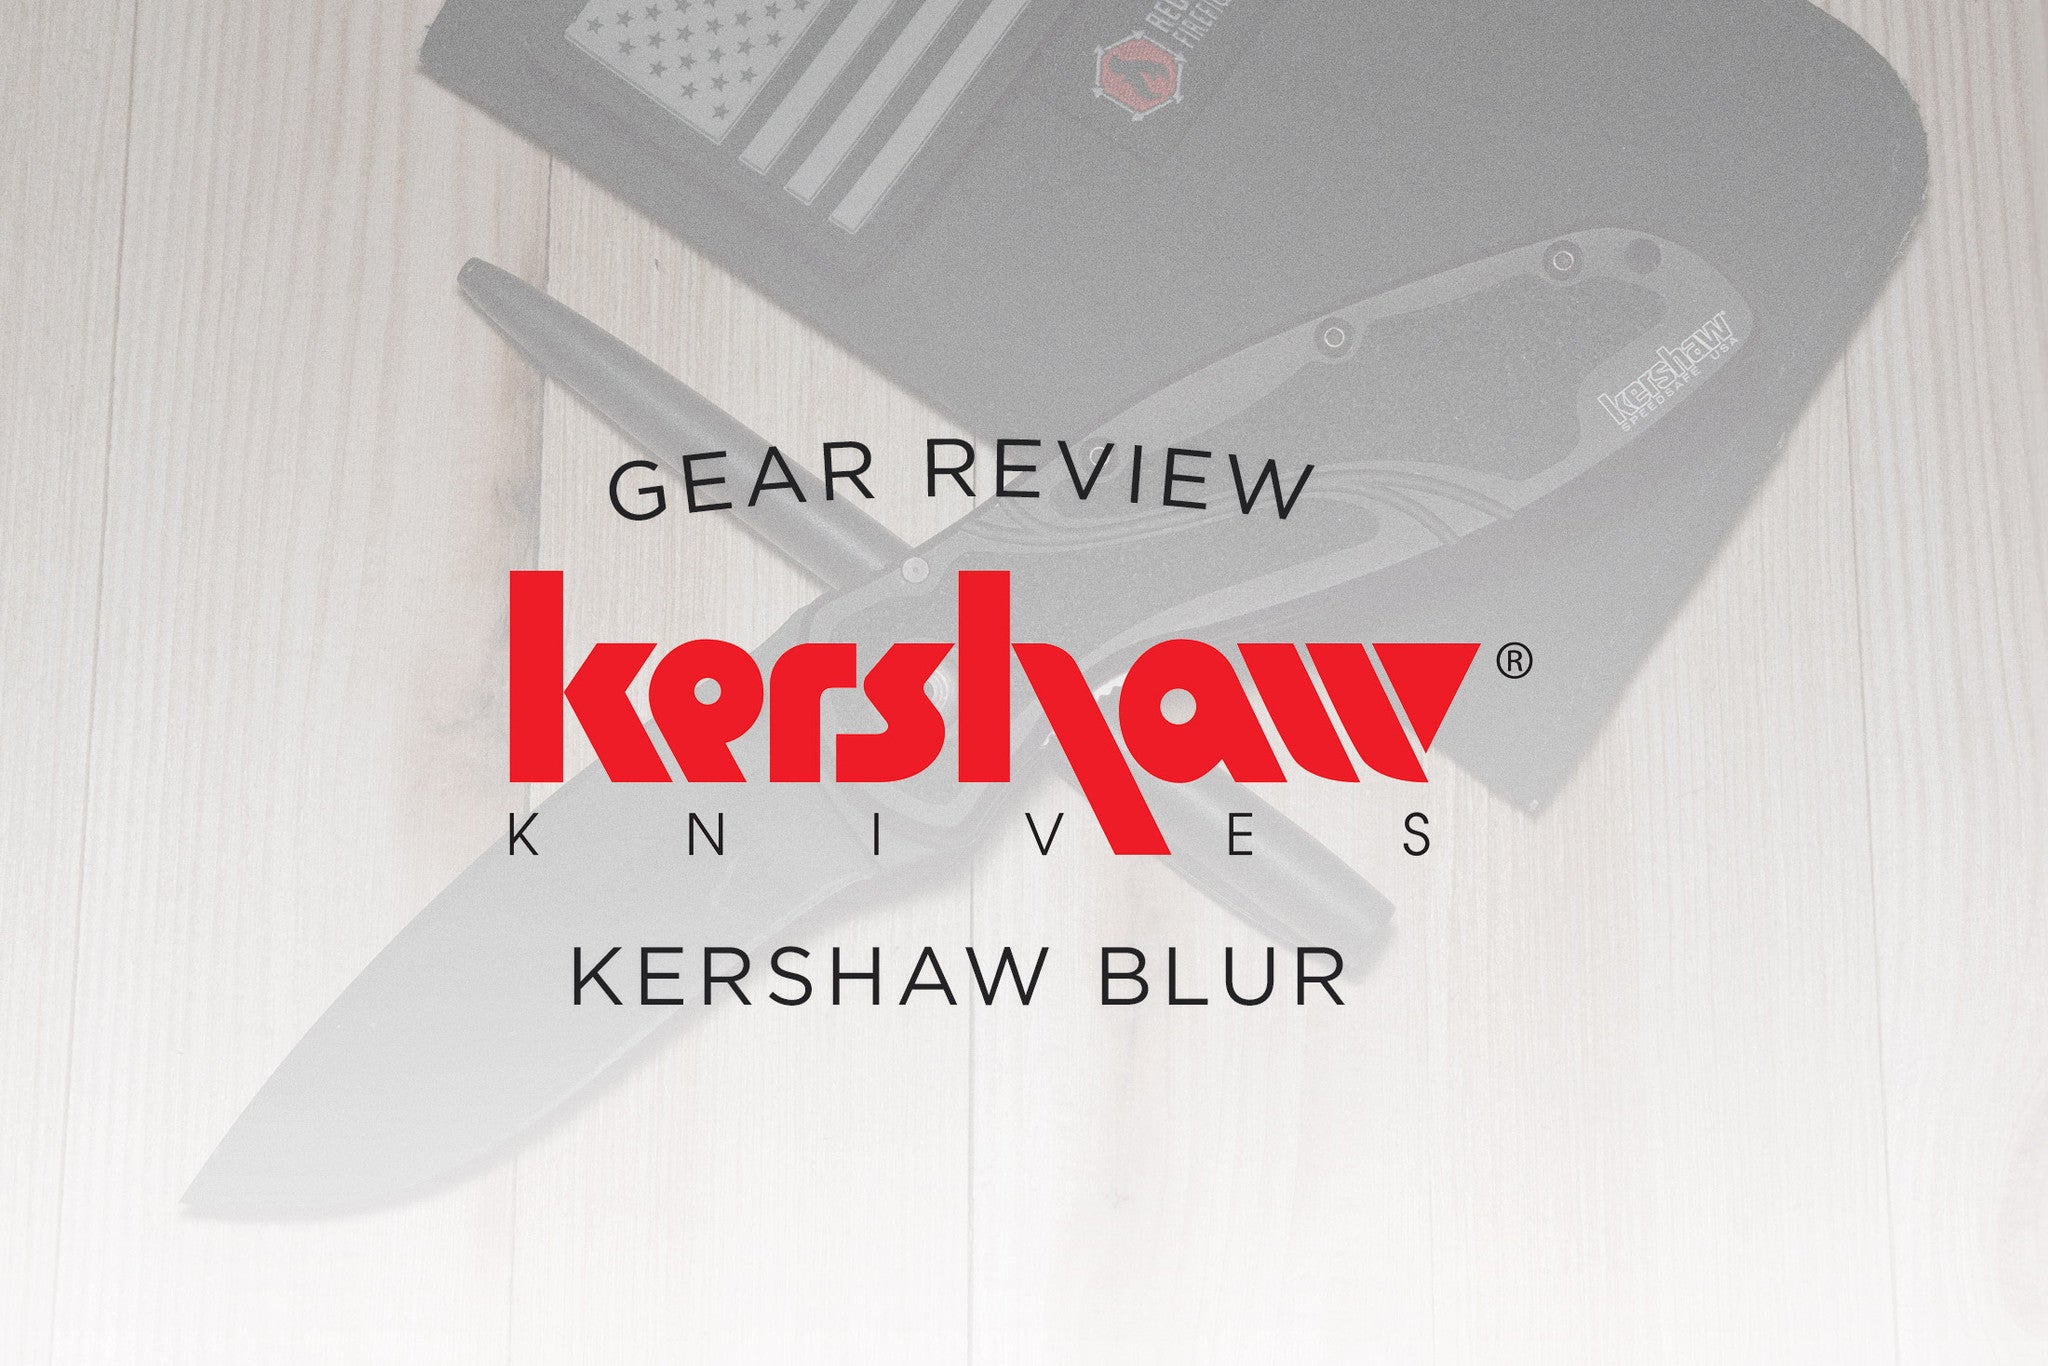 Kershaw Blur Review